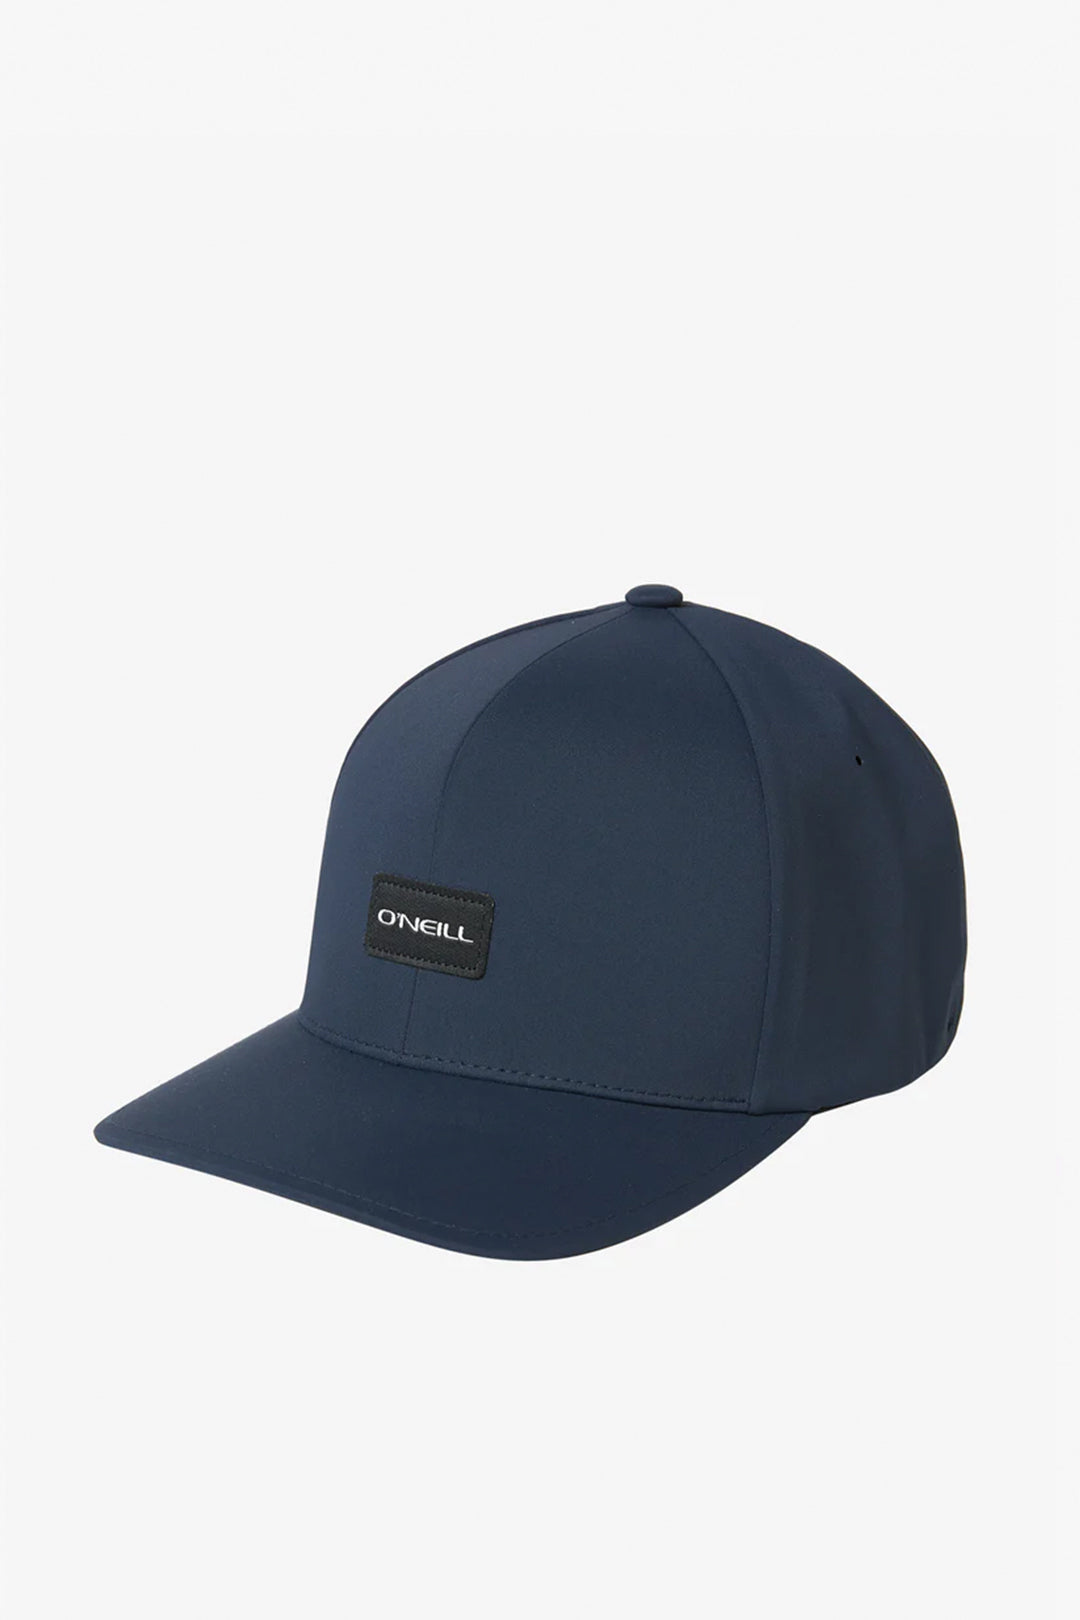 O'Neill cap in Navy color